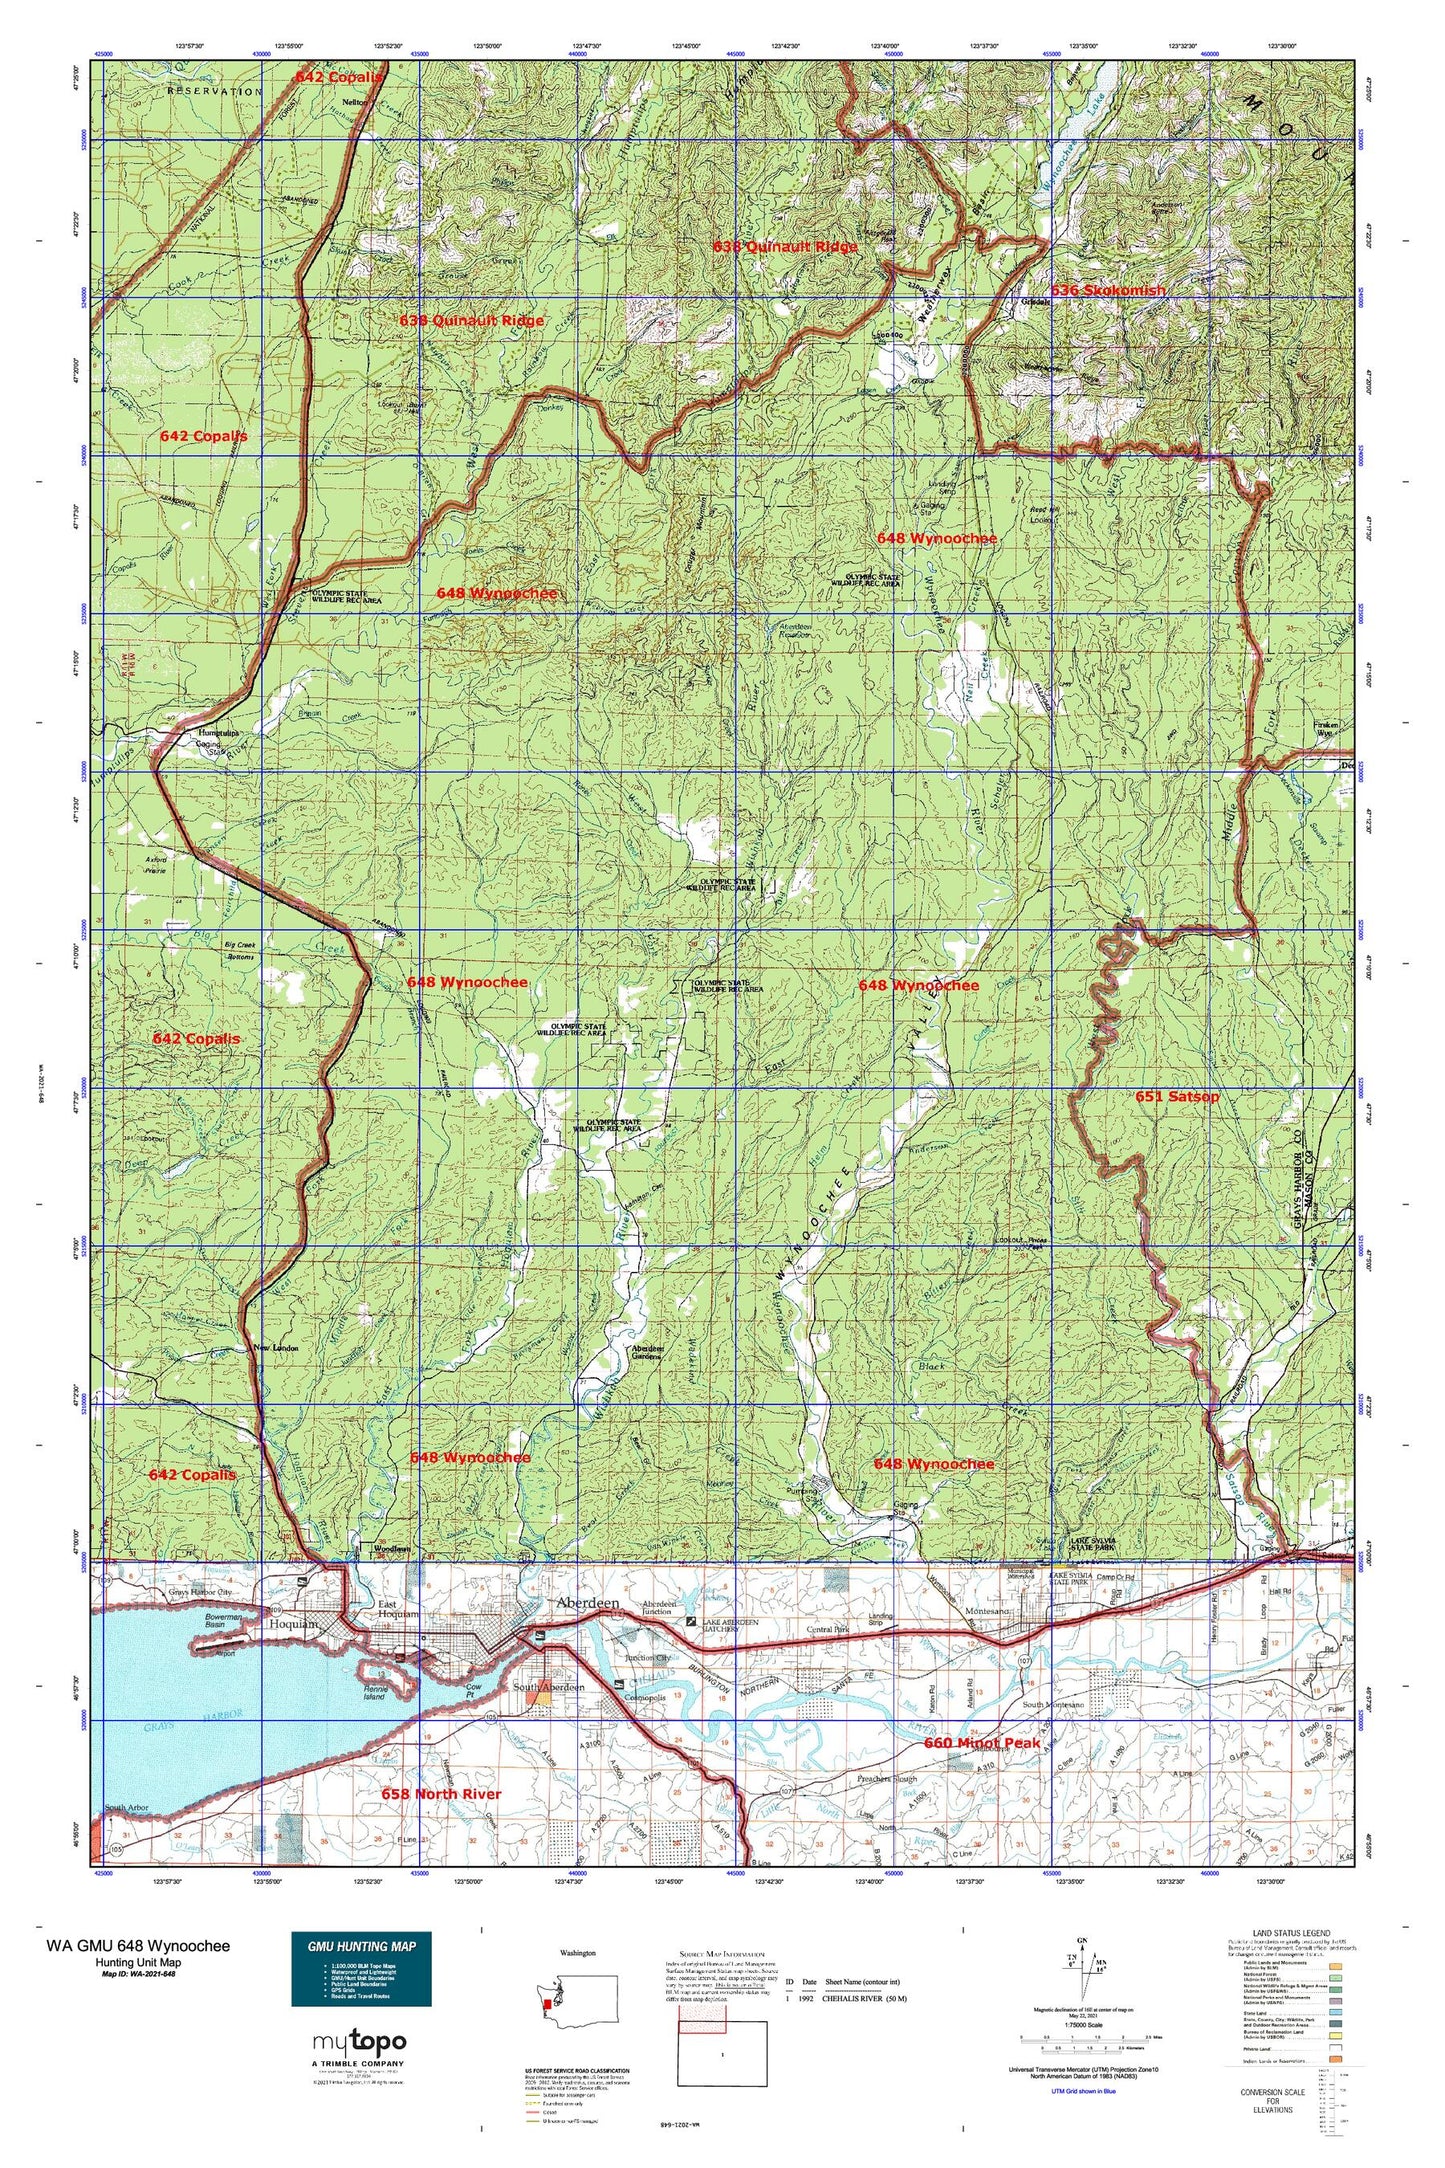 Washington GMU 648 Wynoochee Map Image